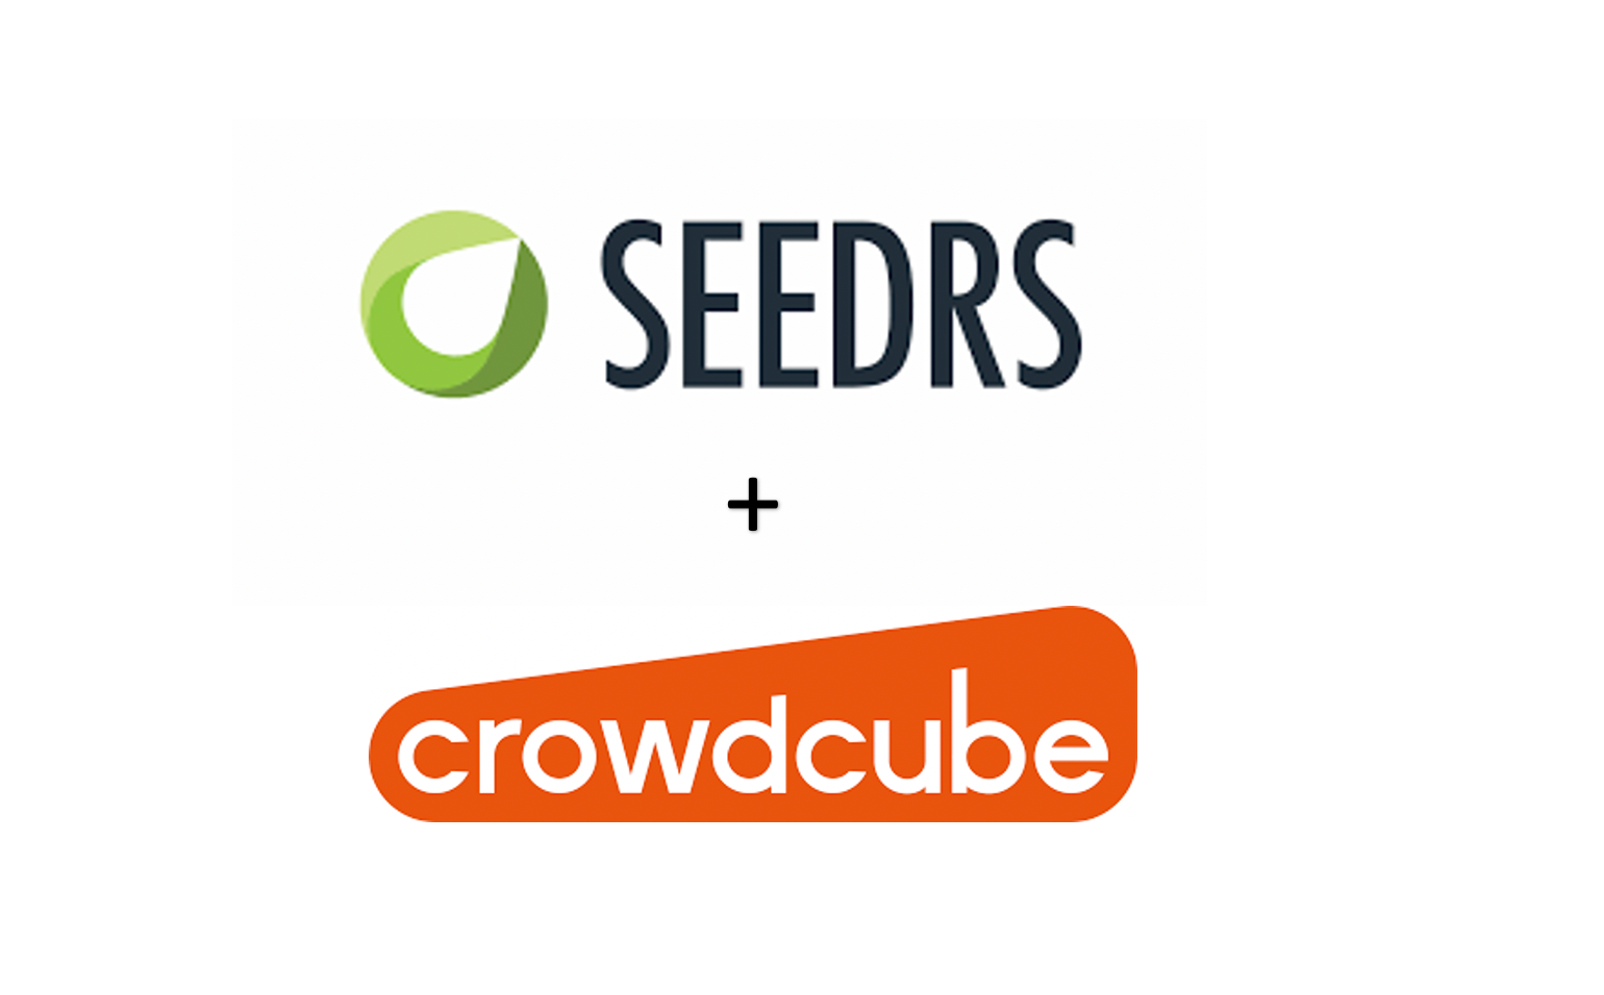 Seedrs logo plus crowdcube logo